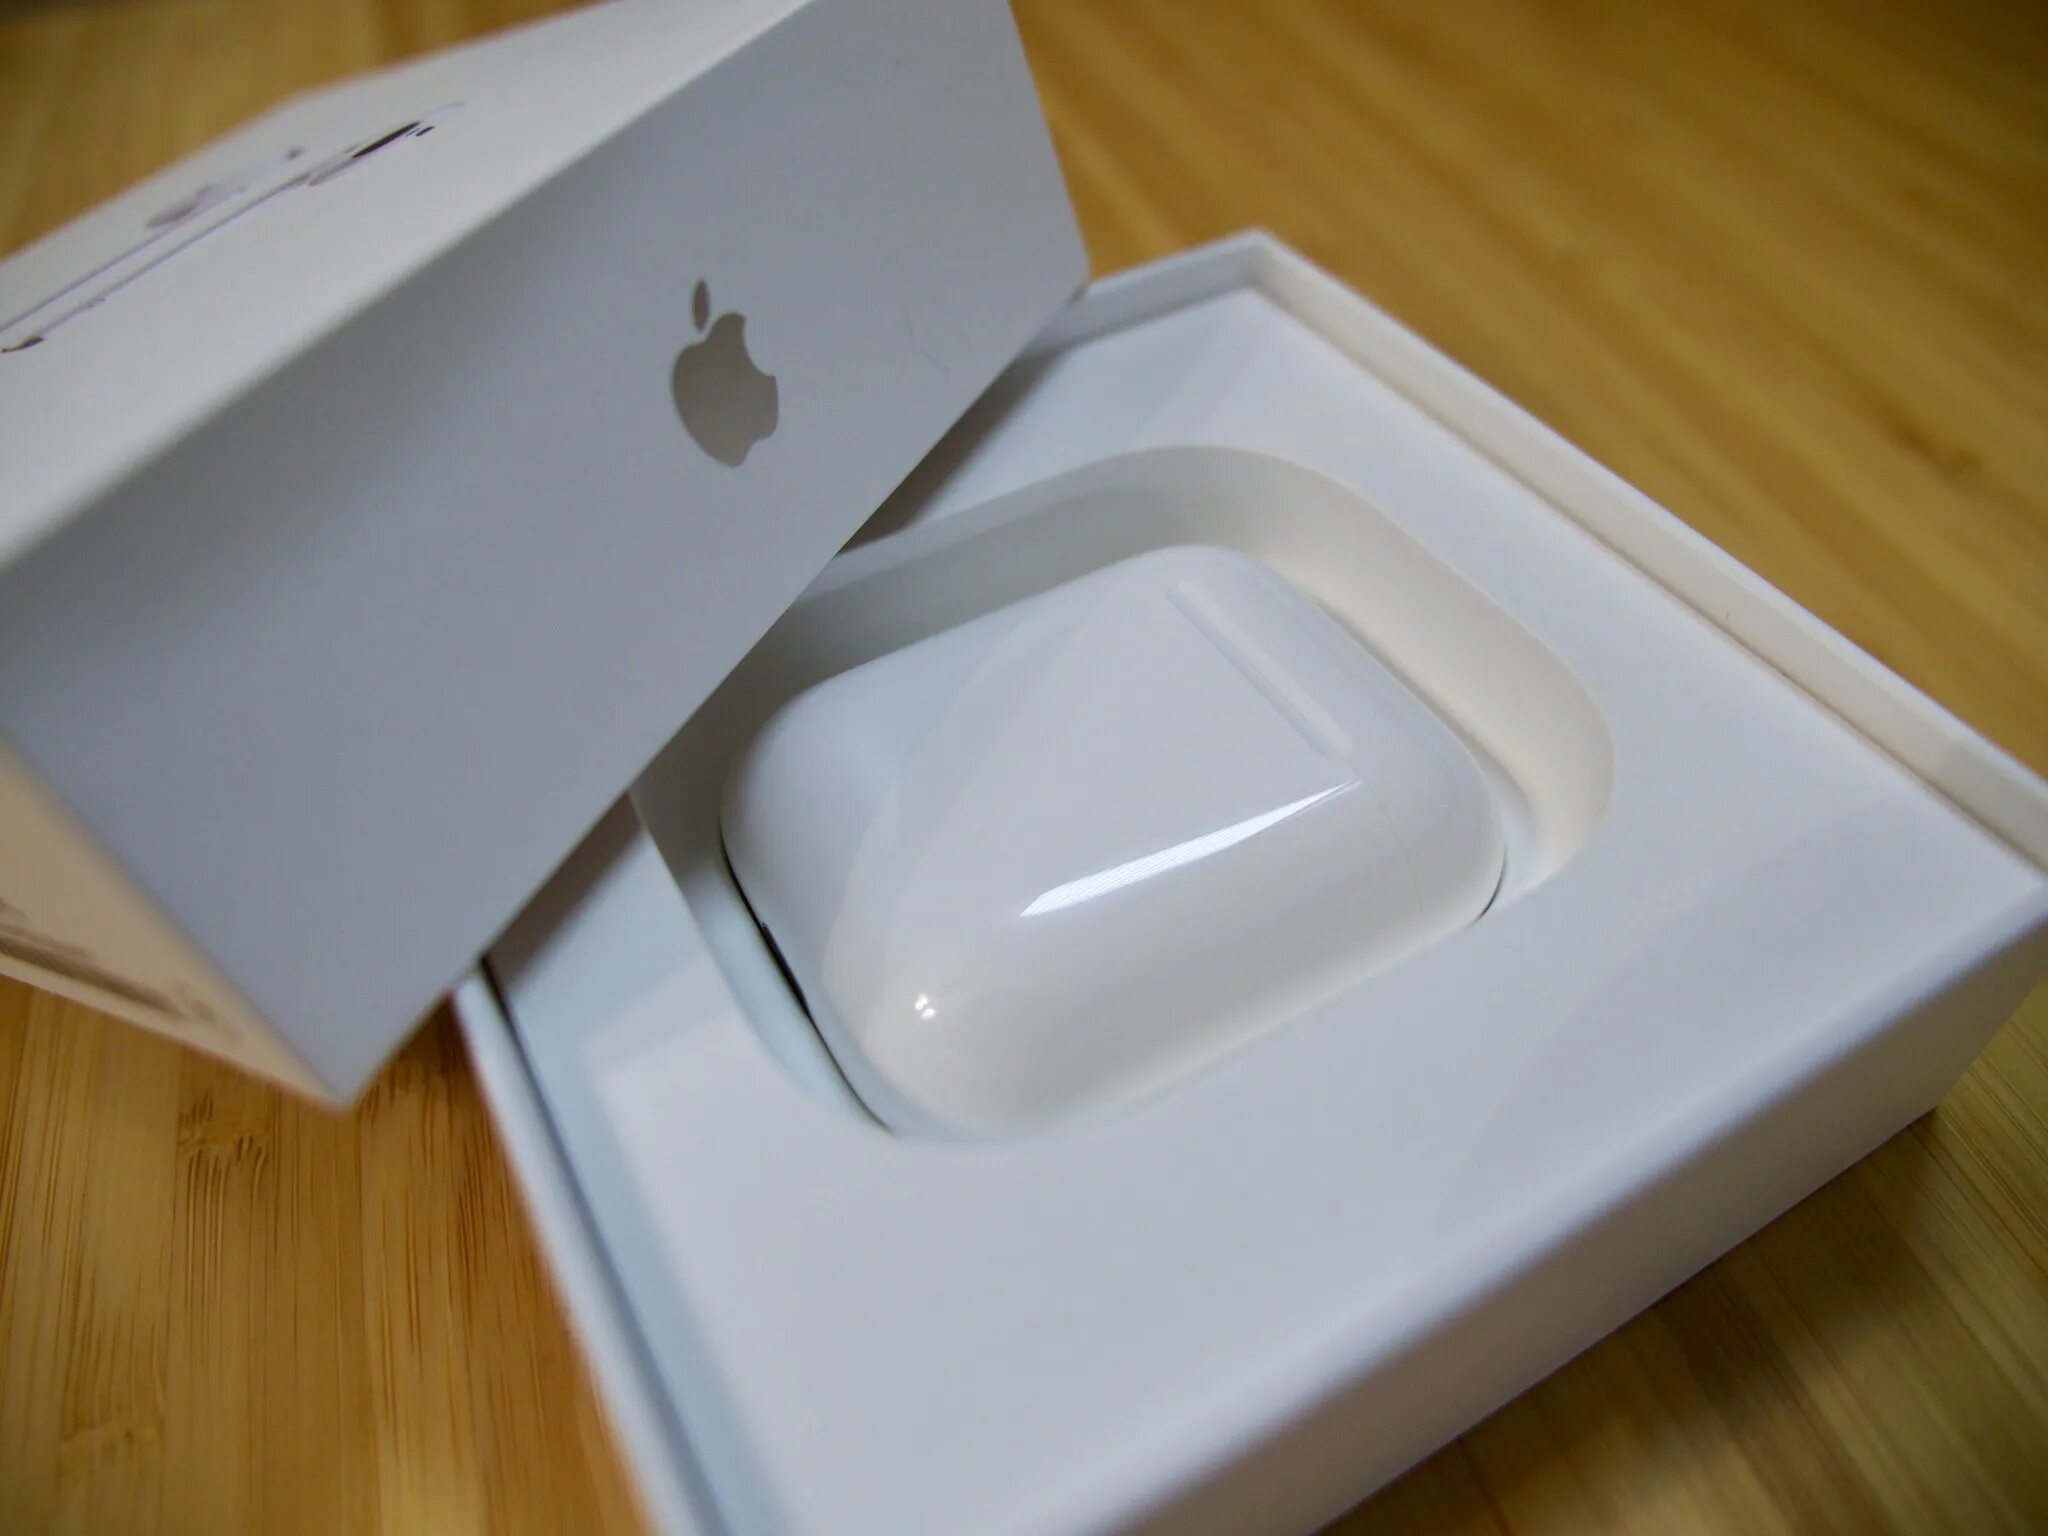 Apple AIRPODS 2 коробка. Apple AIRPODS Pro 2 коробка. Аирподсы эпл. Apple аирподс коробка.